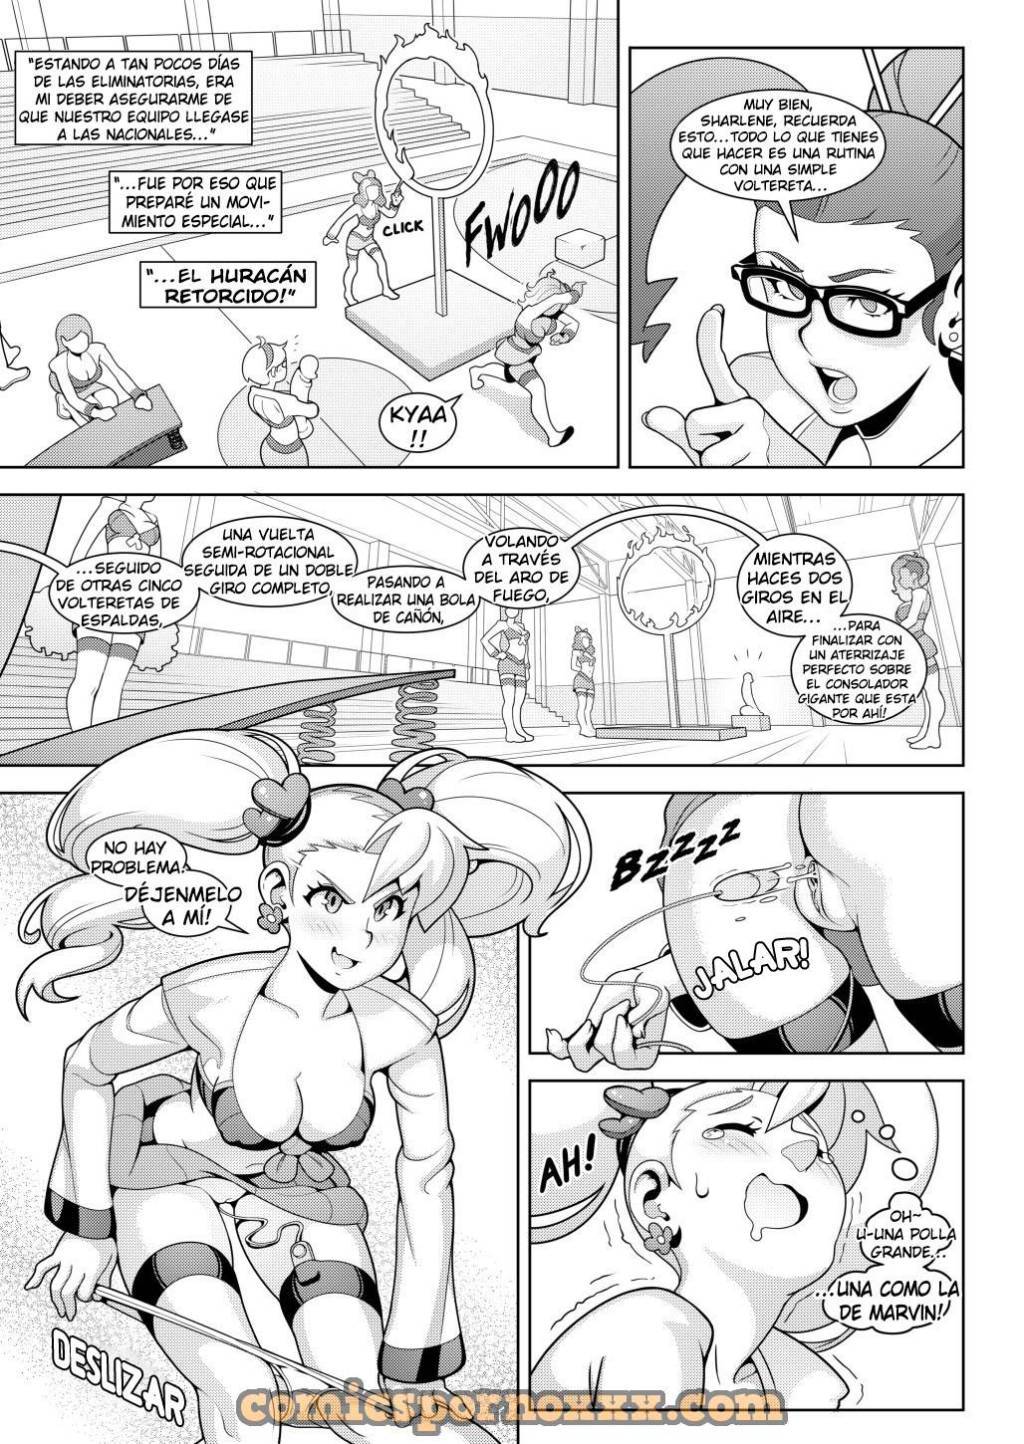 Hot Shit High! #2 - 3 - Comics Porno - Hentai Manga - Cartoon XXX